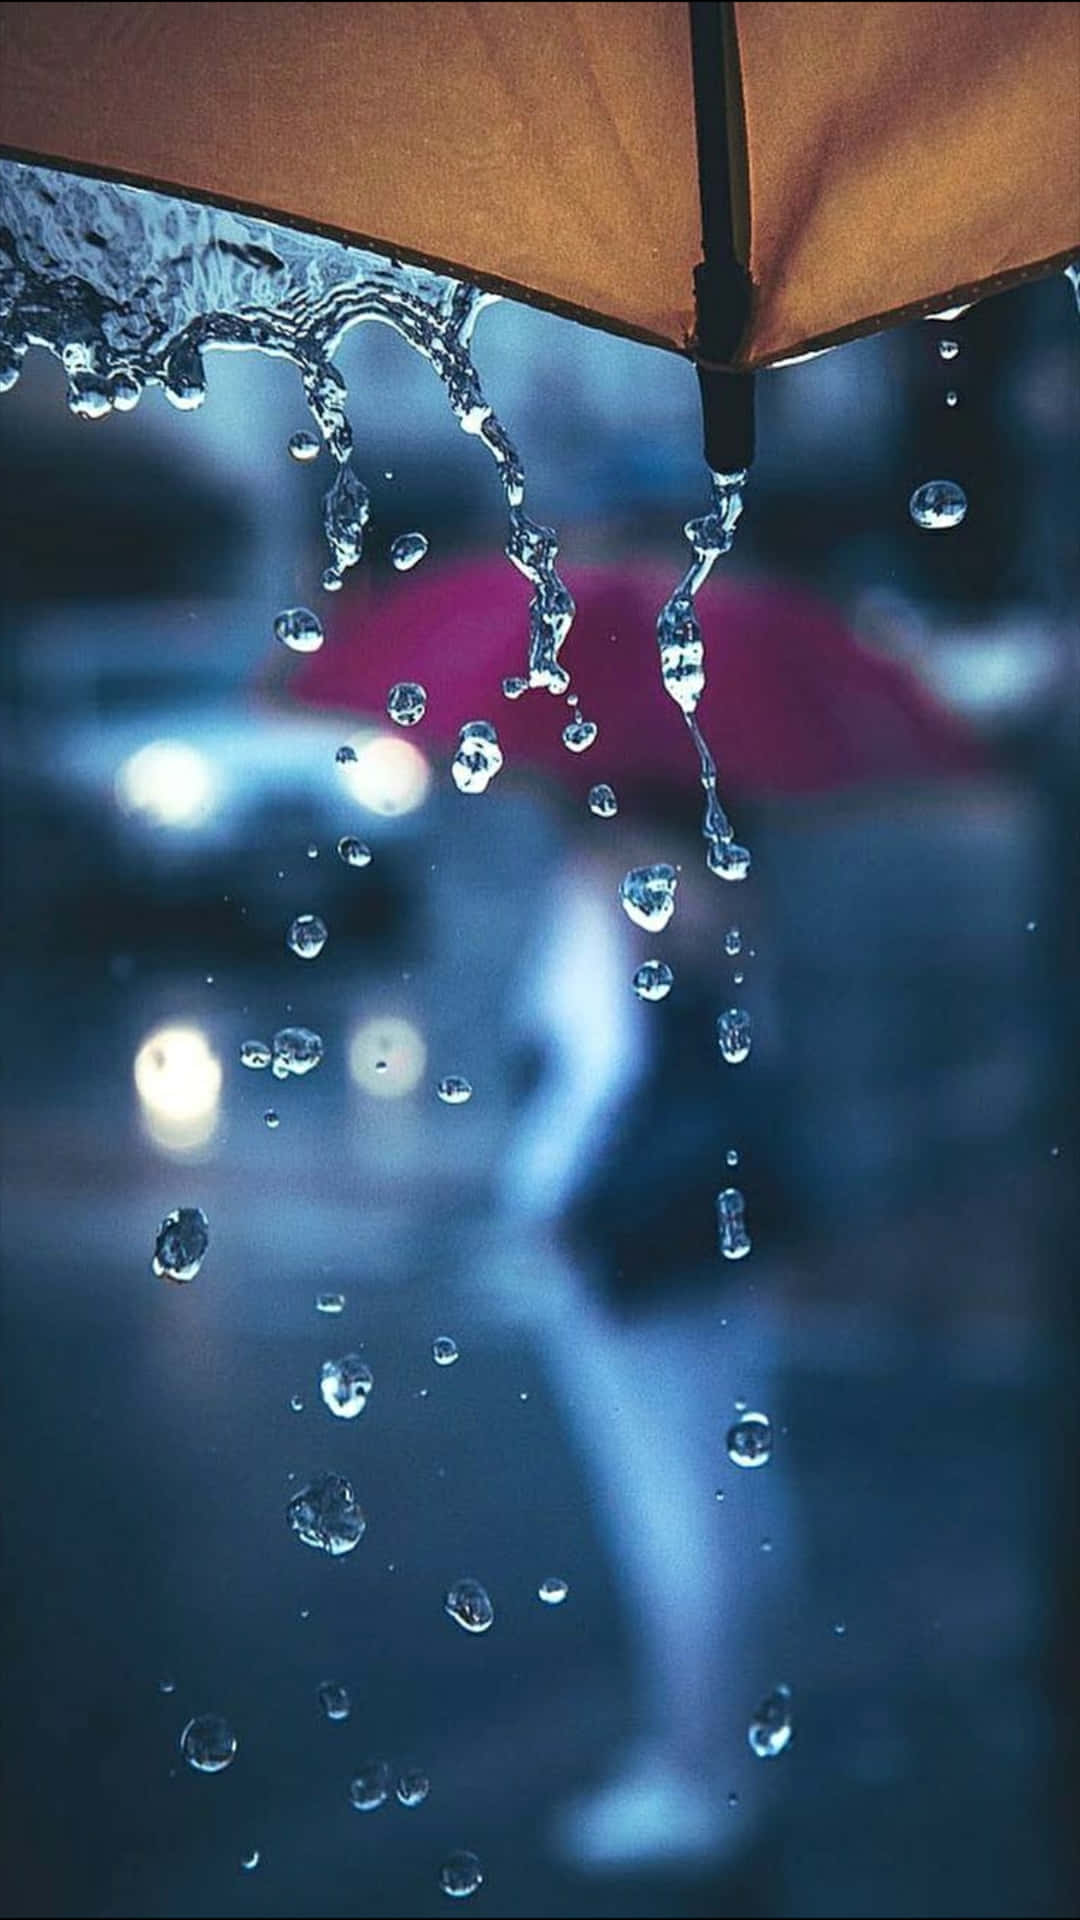 Umbrella Edge With Rain On A Rainy Day Picture